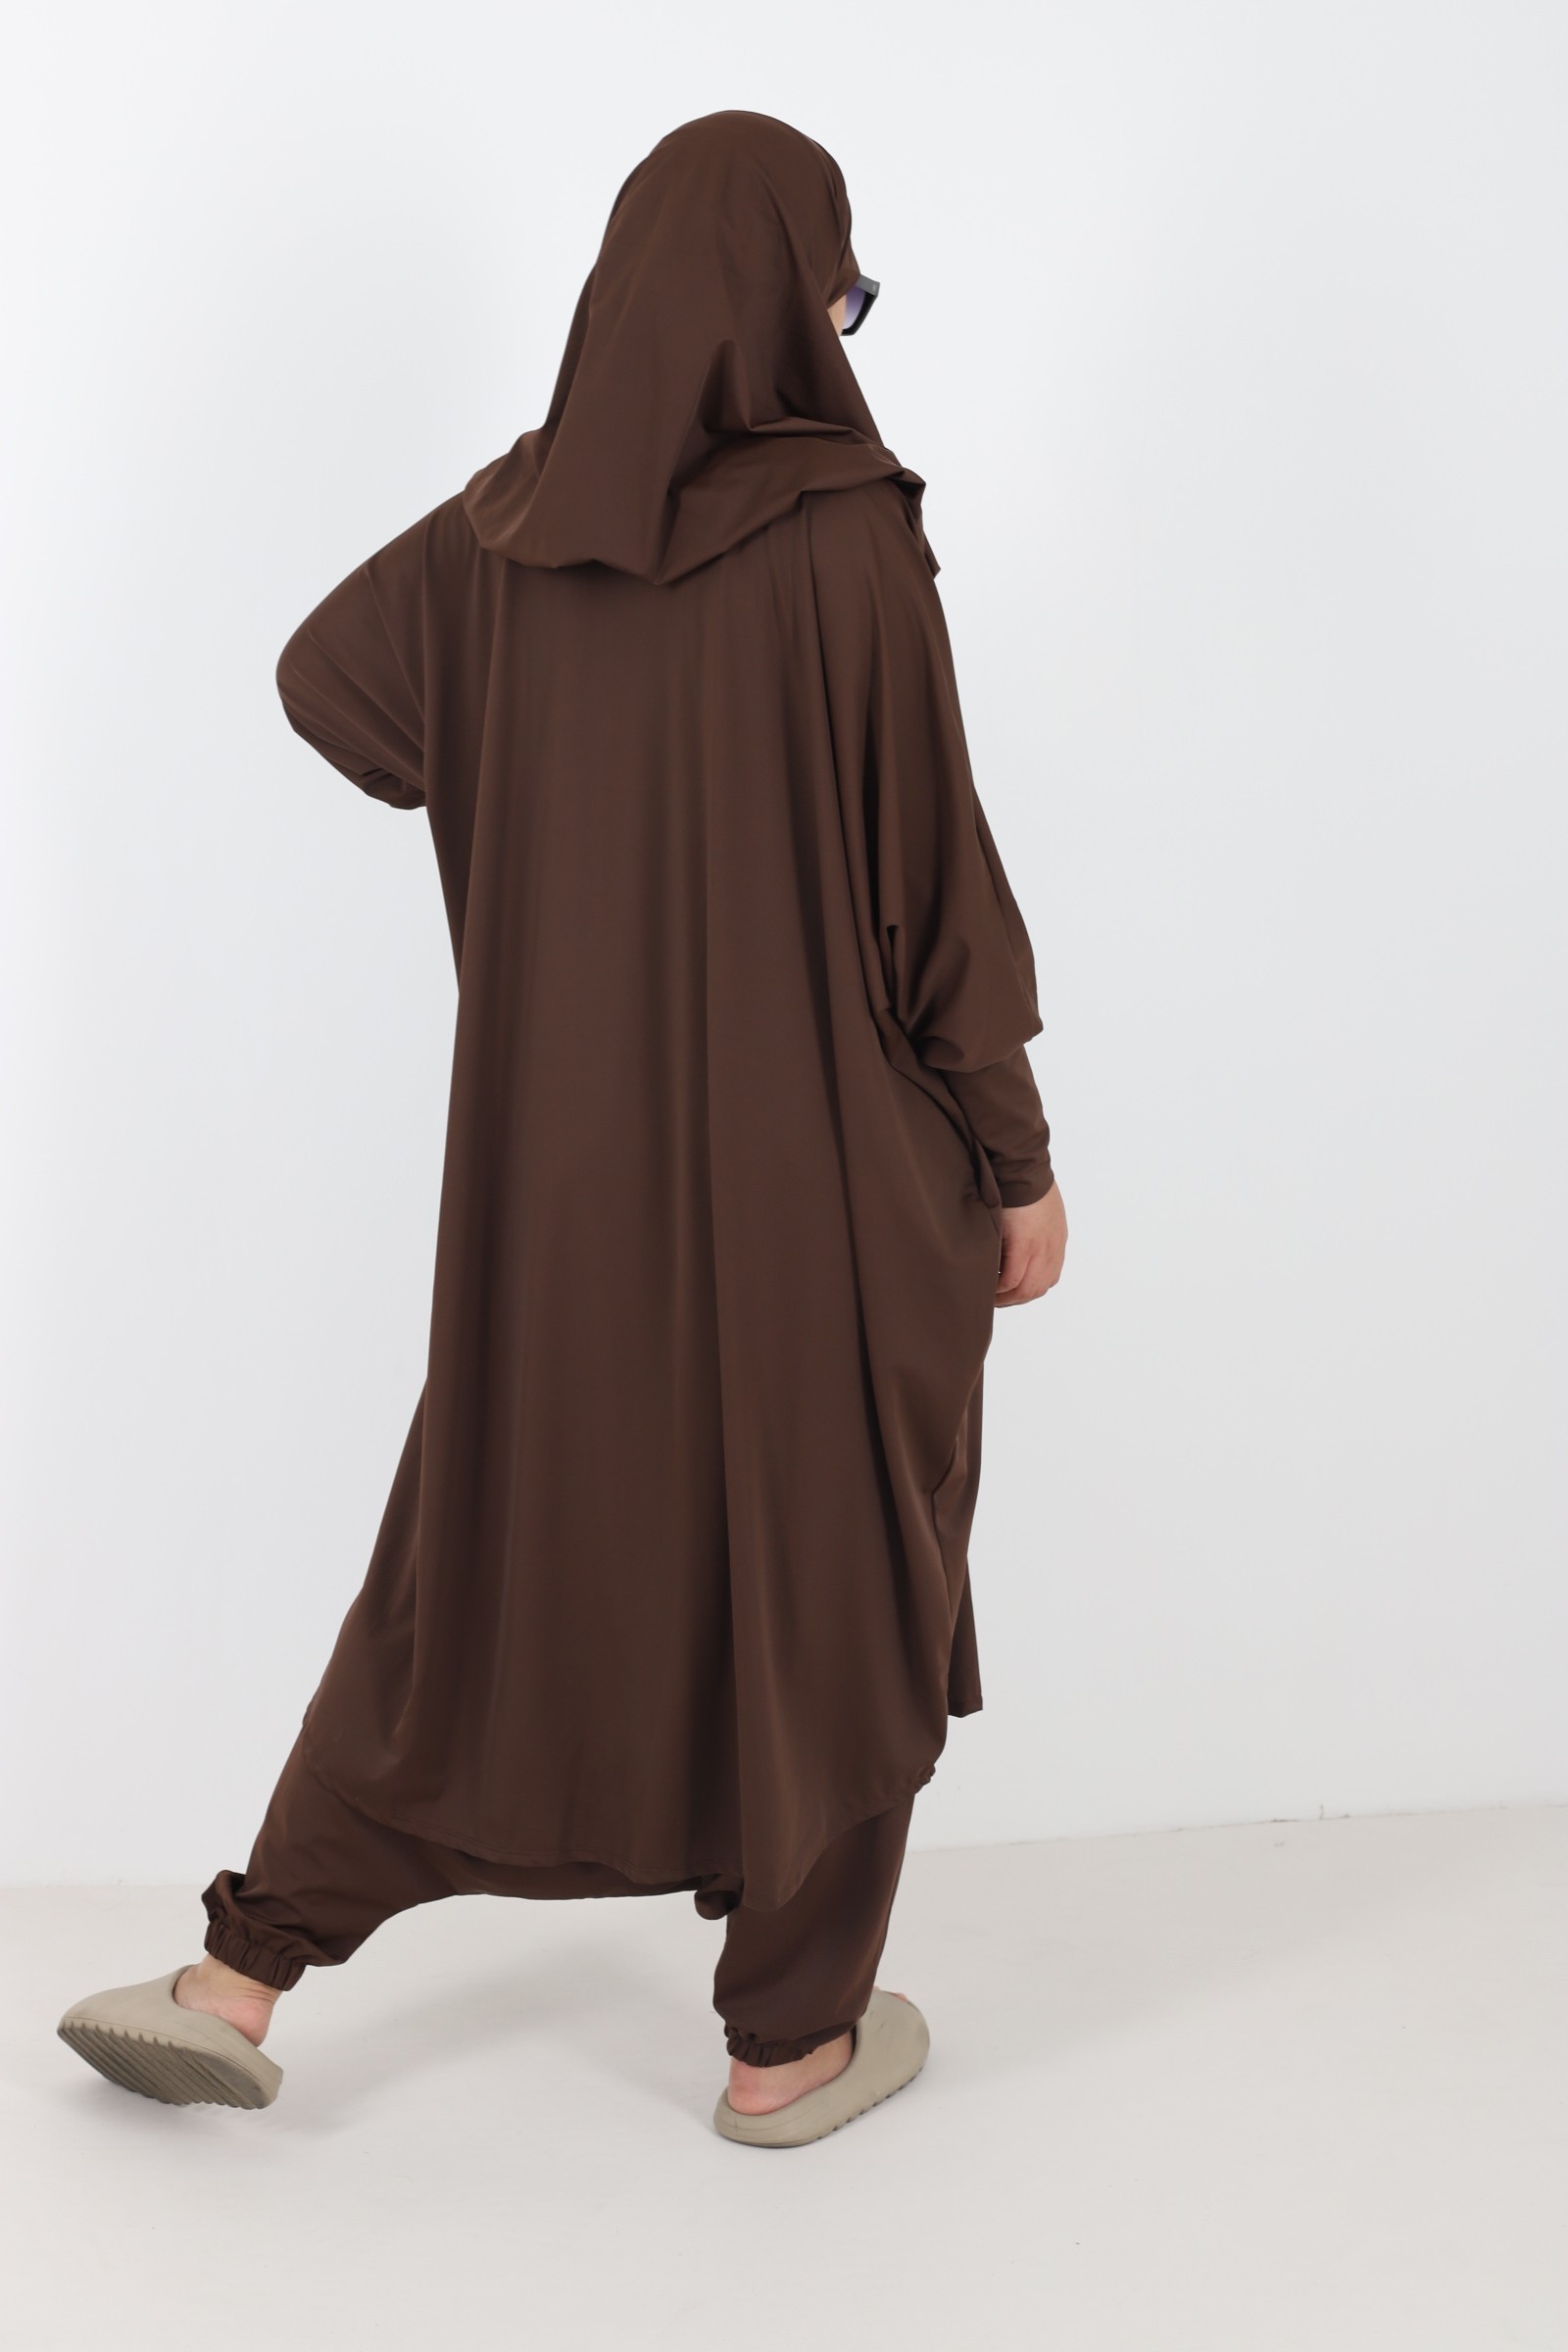 jilbab de bain femme musulmane marron Burkini jilbeb islamique